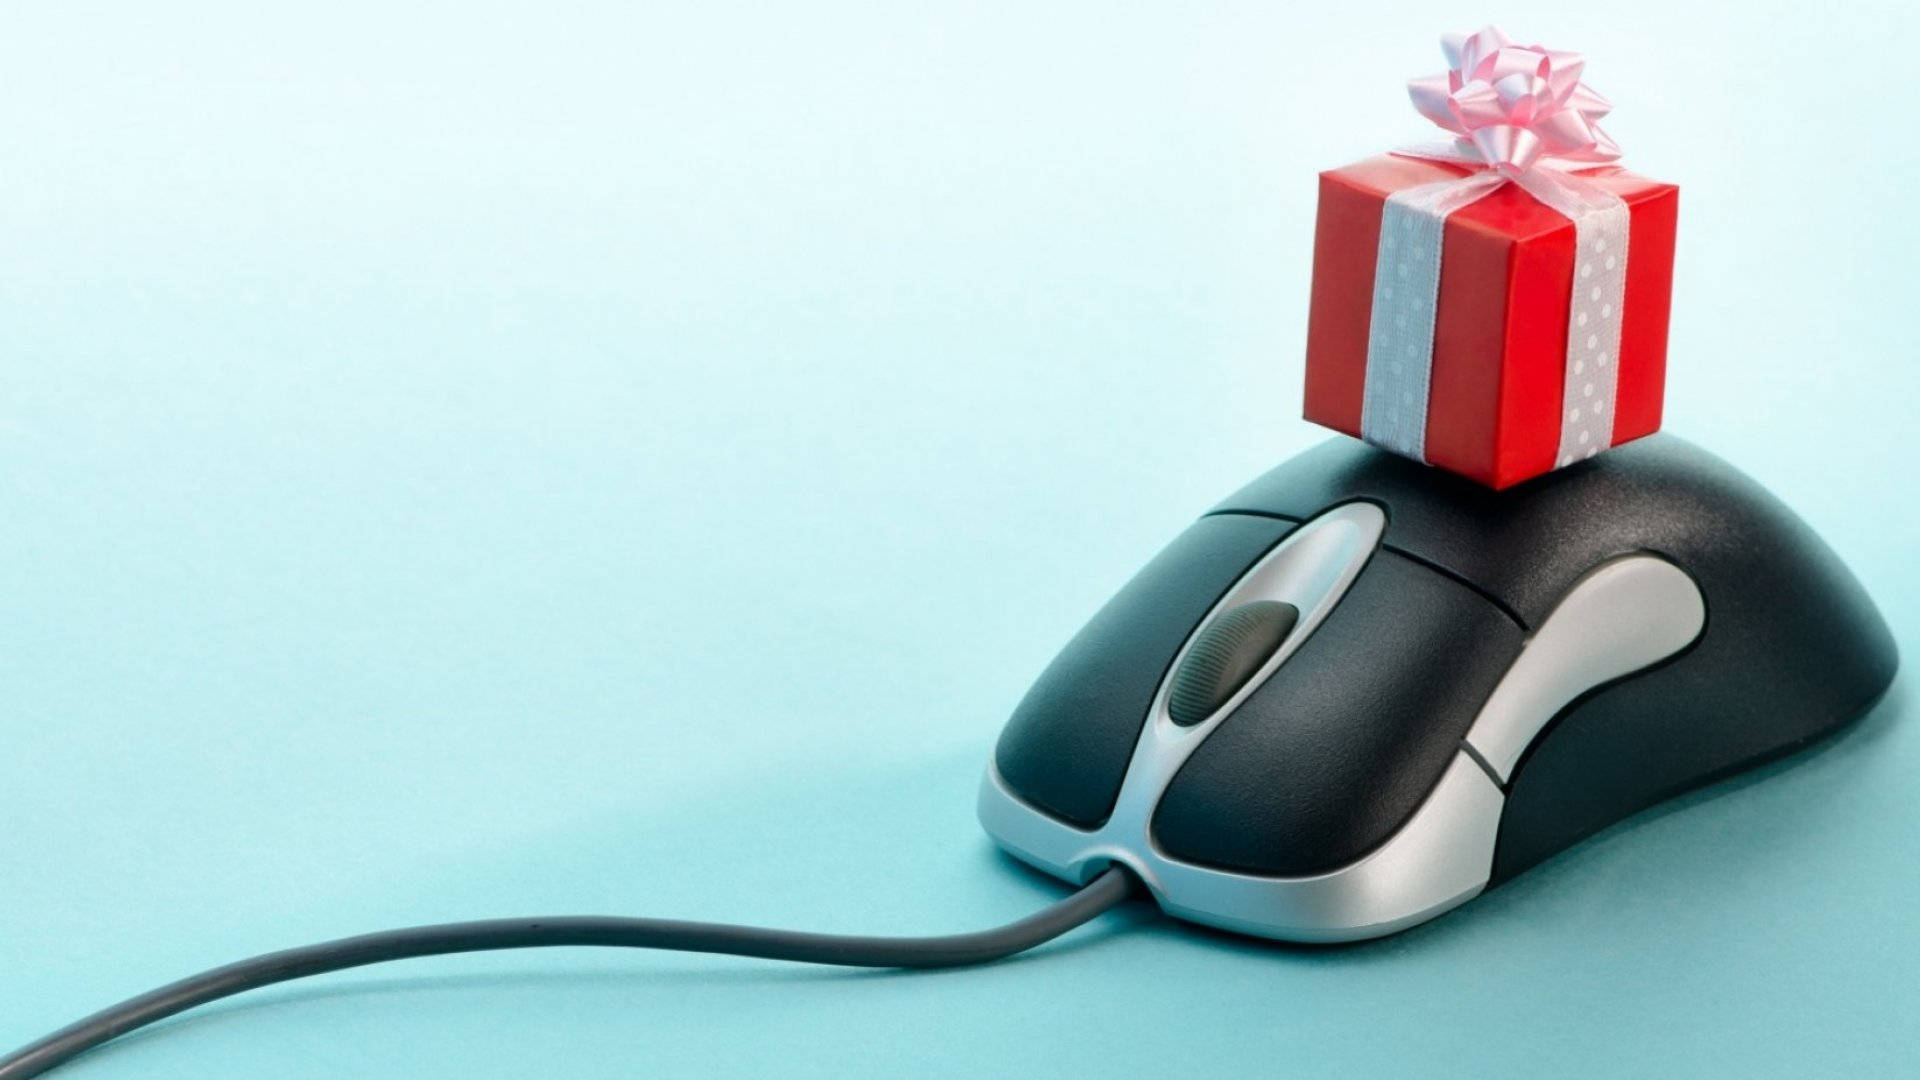 PC Mouse Christmas Present Wallpaper